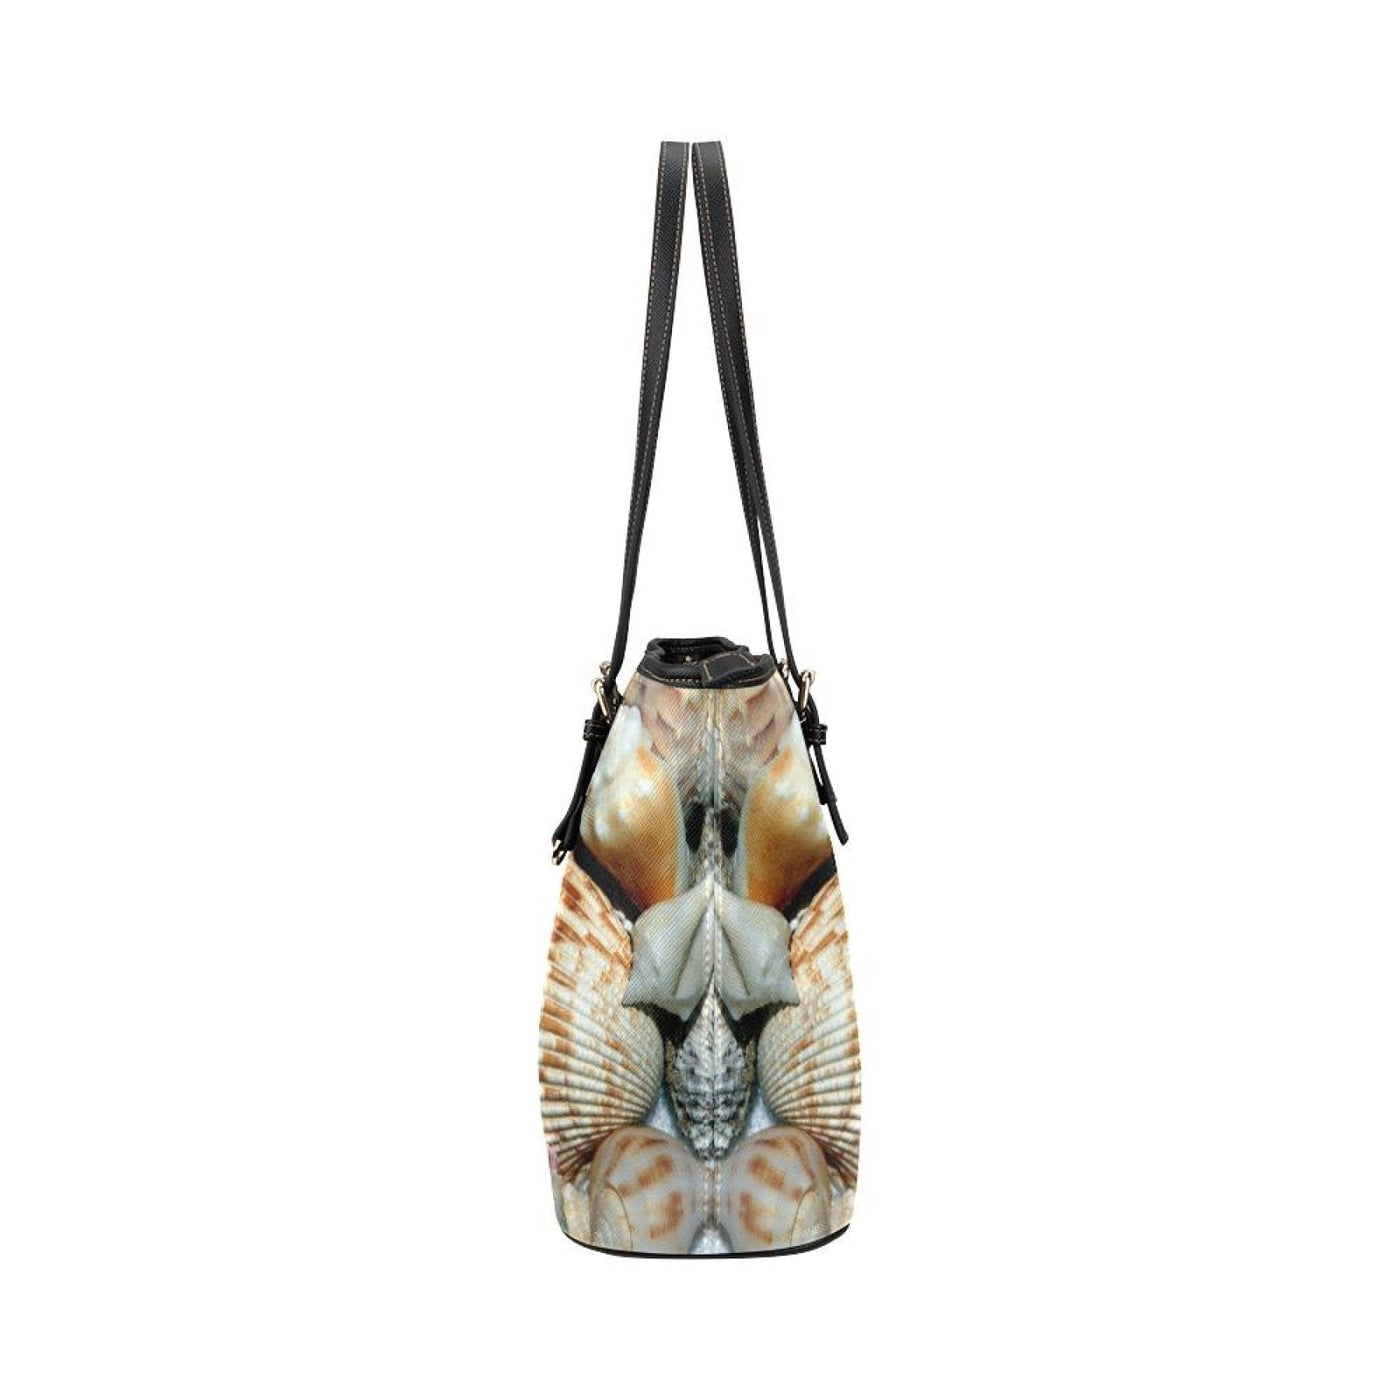 Large Leather Tote Shoulder Bag - Multicolor Sea Shell Illustration - Bags